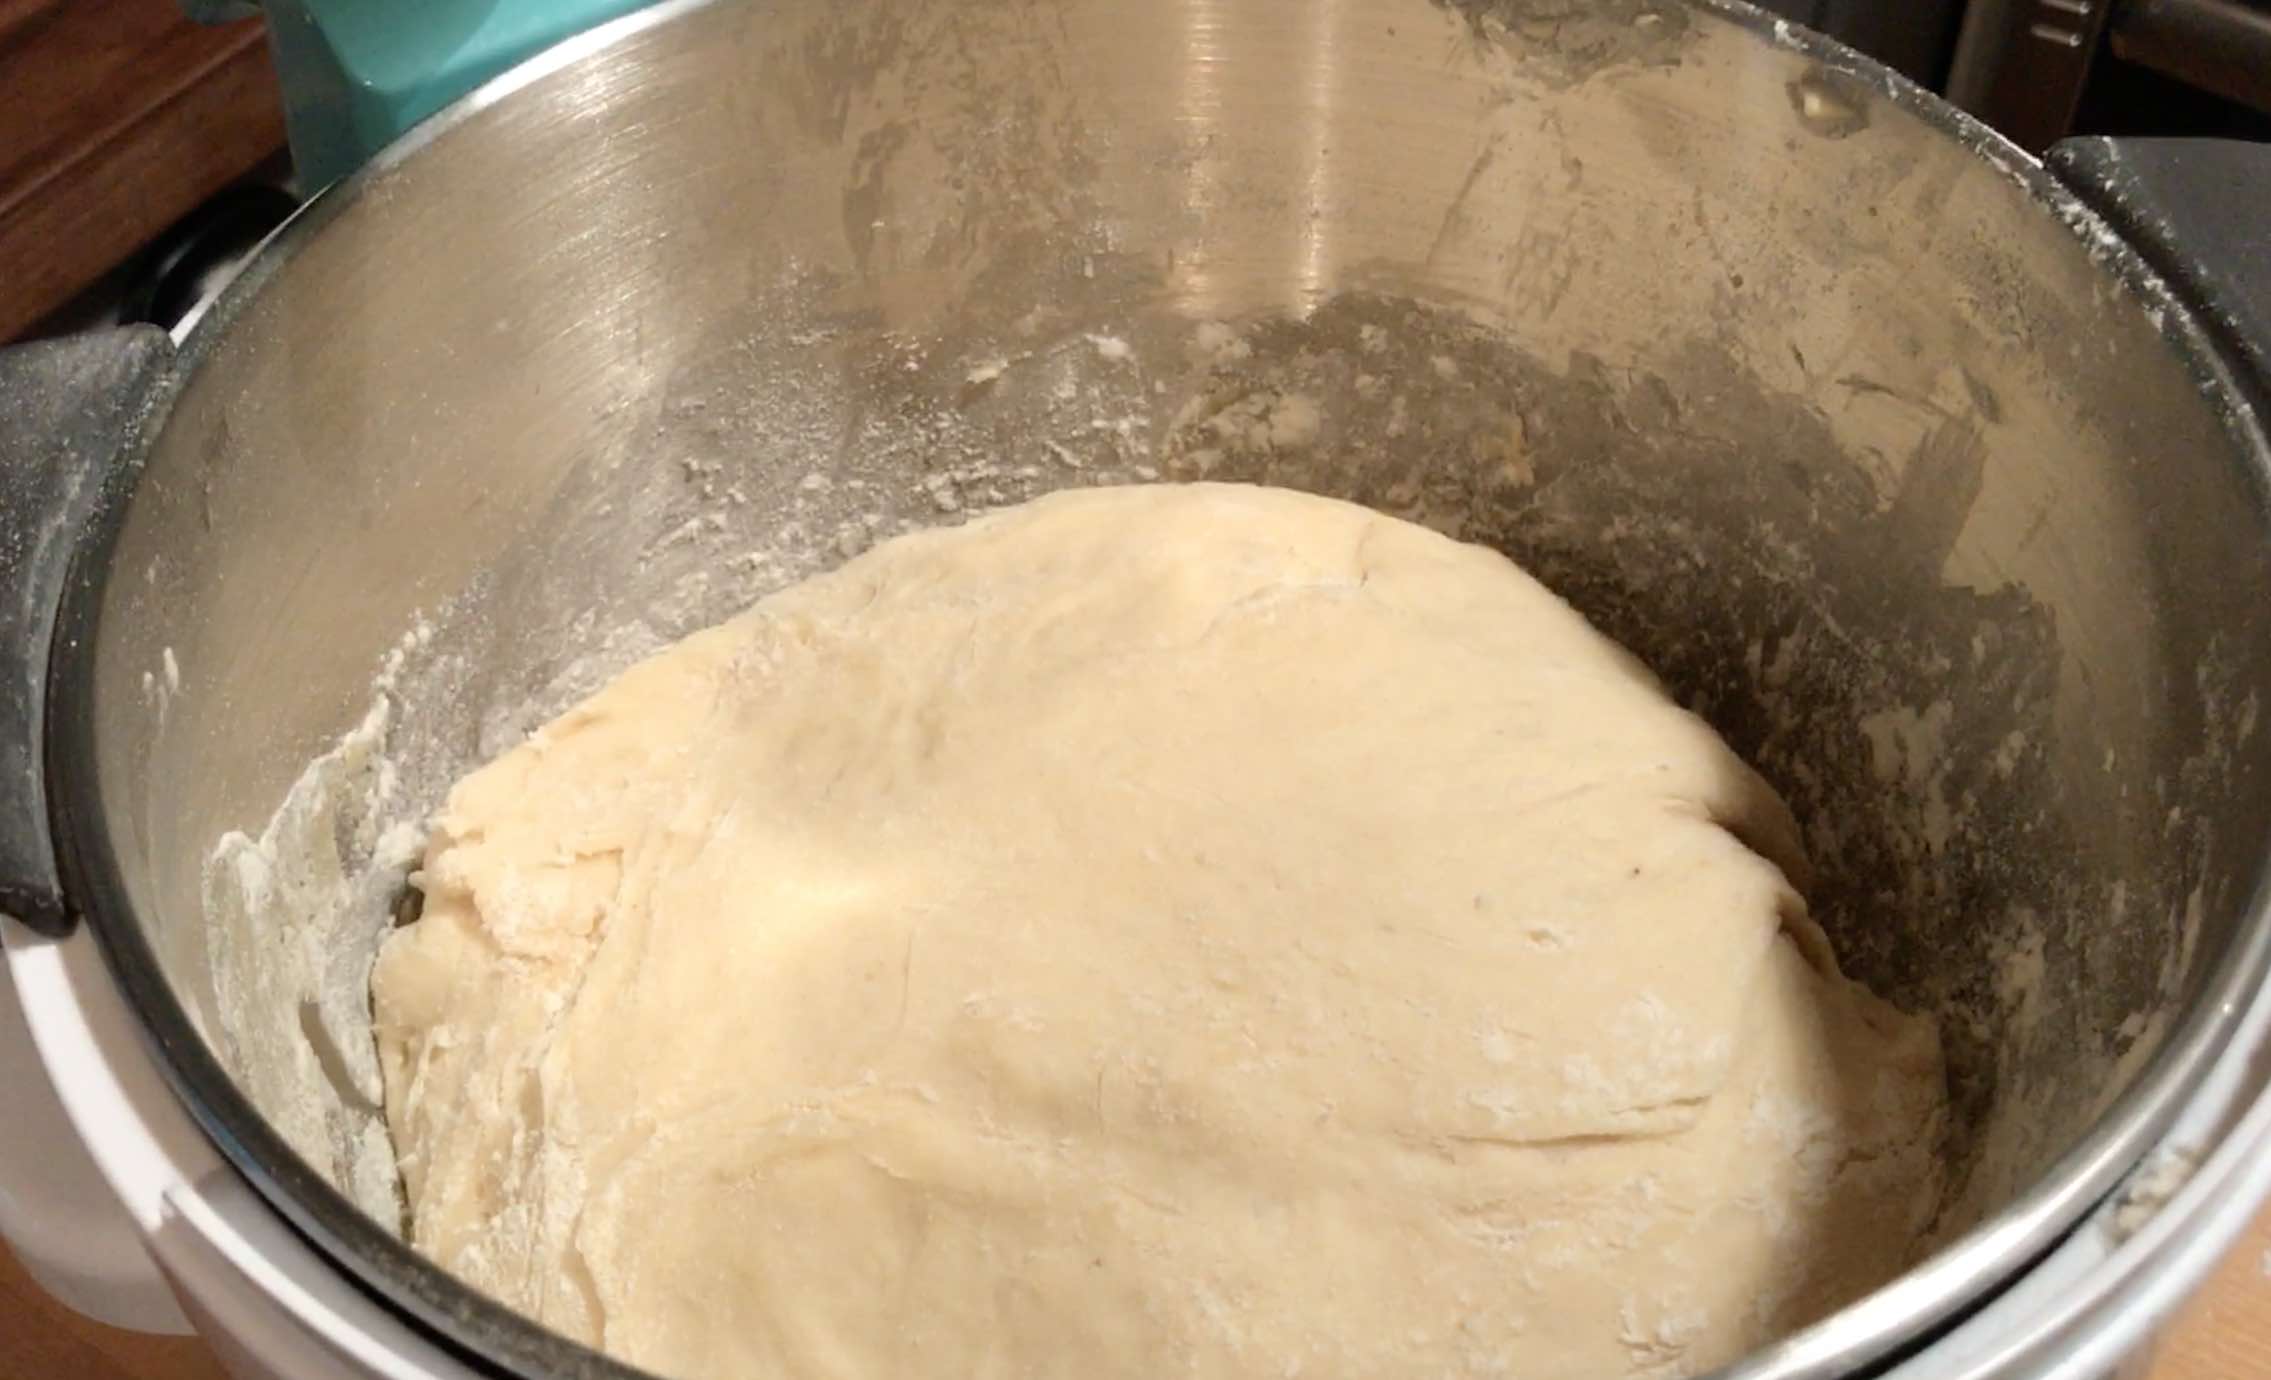 https://blog.bestbuy.ca/wp-content/uploads/2017/02/baking-bread-kitchenaid-precise-heat-mixing-bowl.jpg